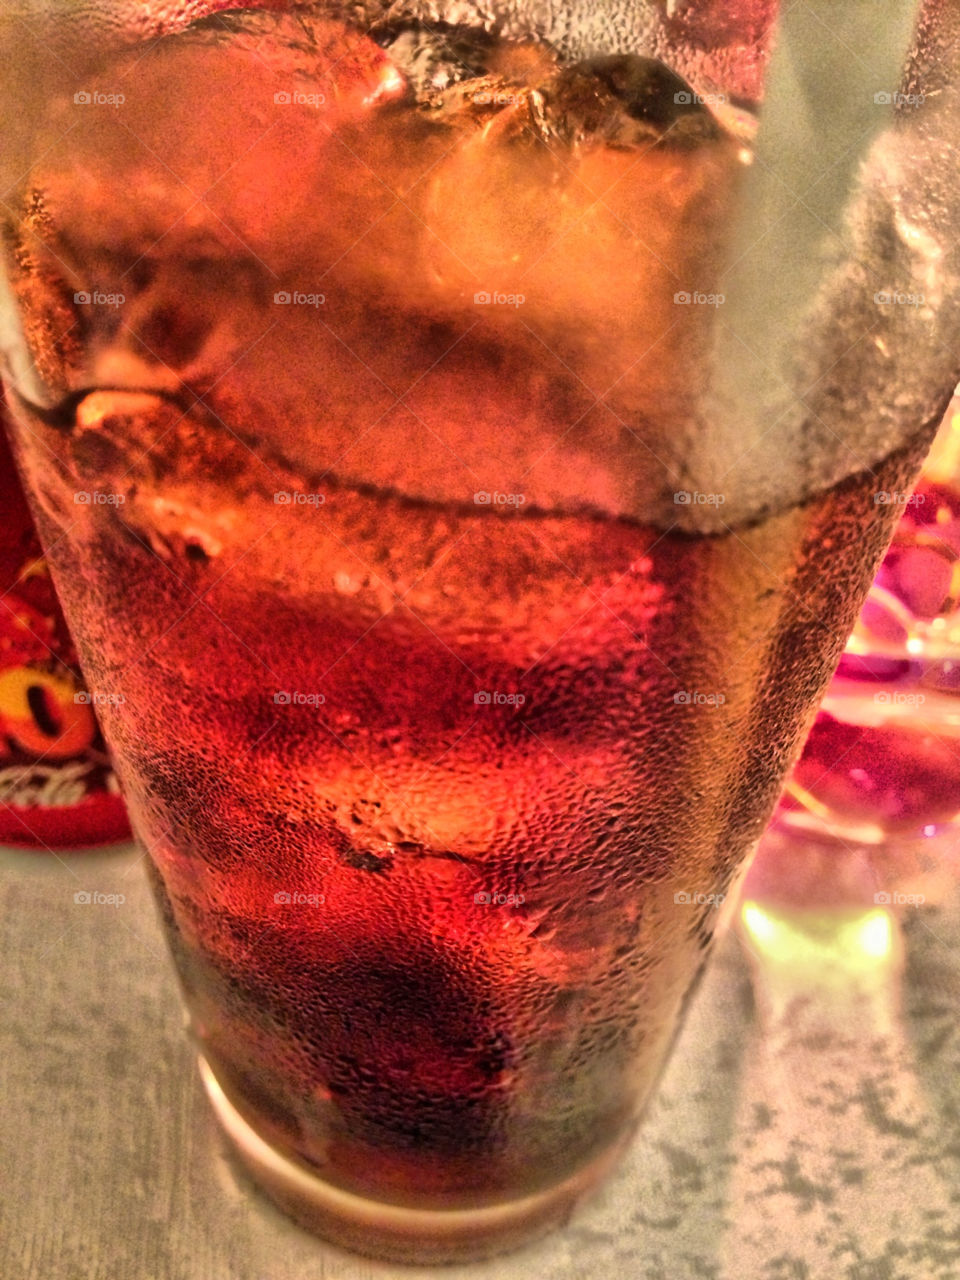 A glass of coke